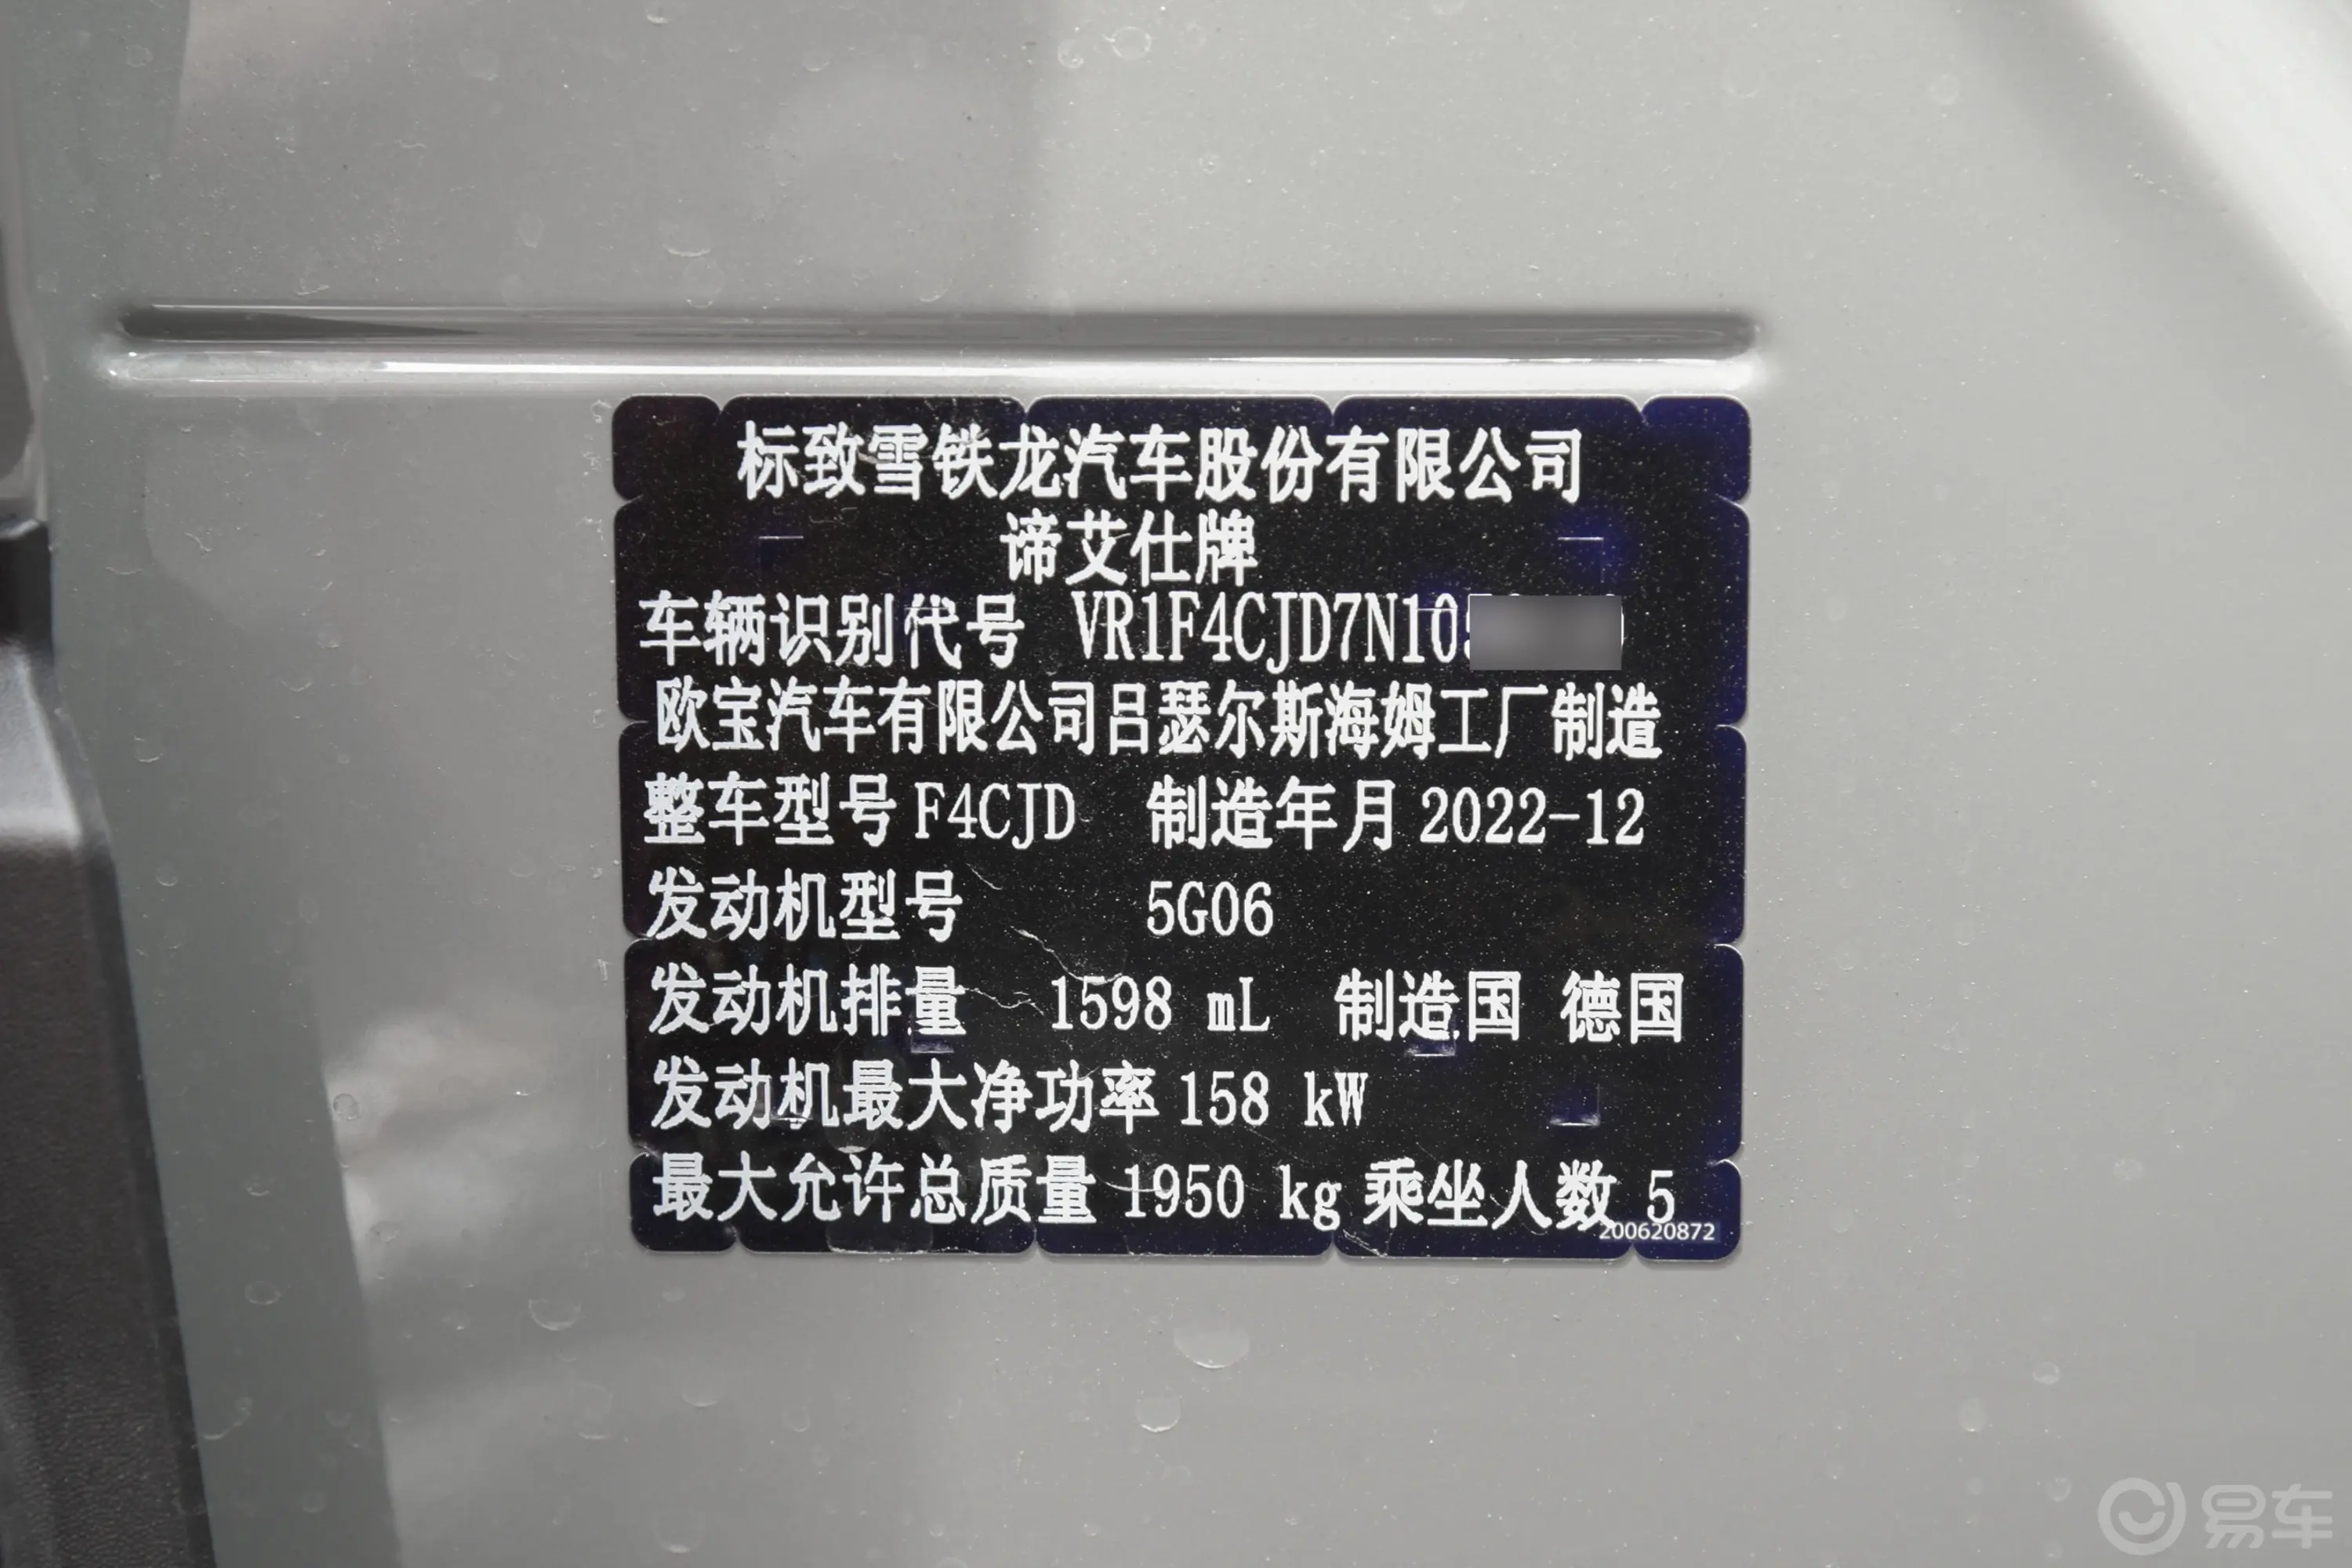 DS 41.6T 夏乐宫CROSS版车辆信息铭牌